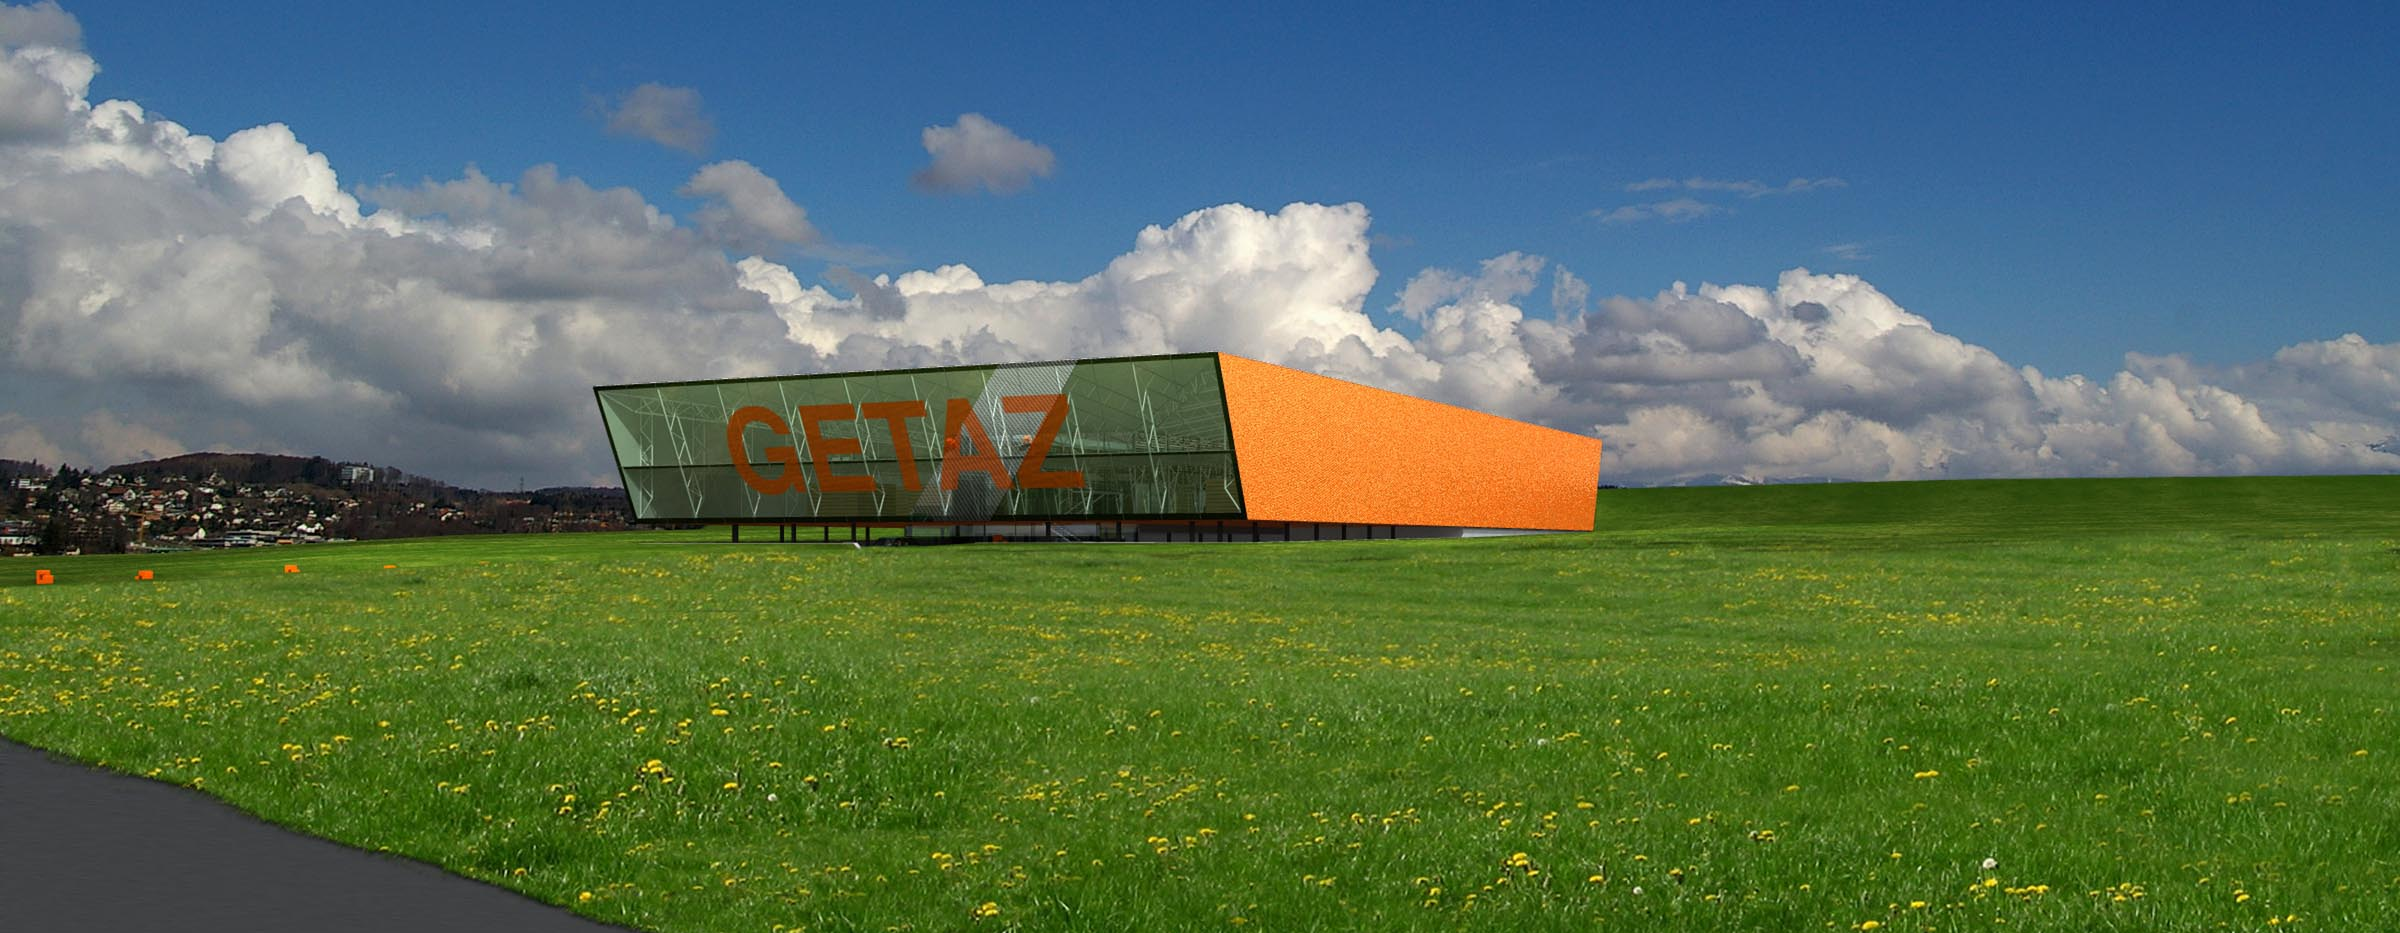 Gétaz-Miauton SA cover picture